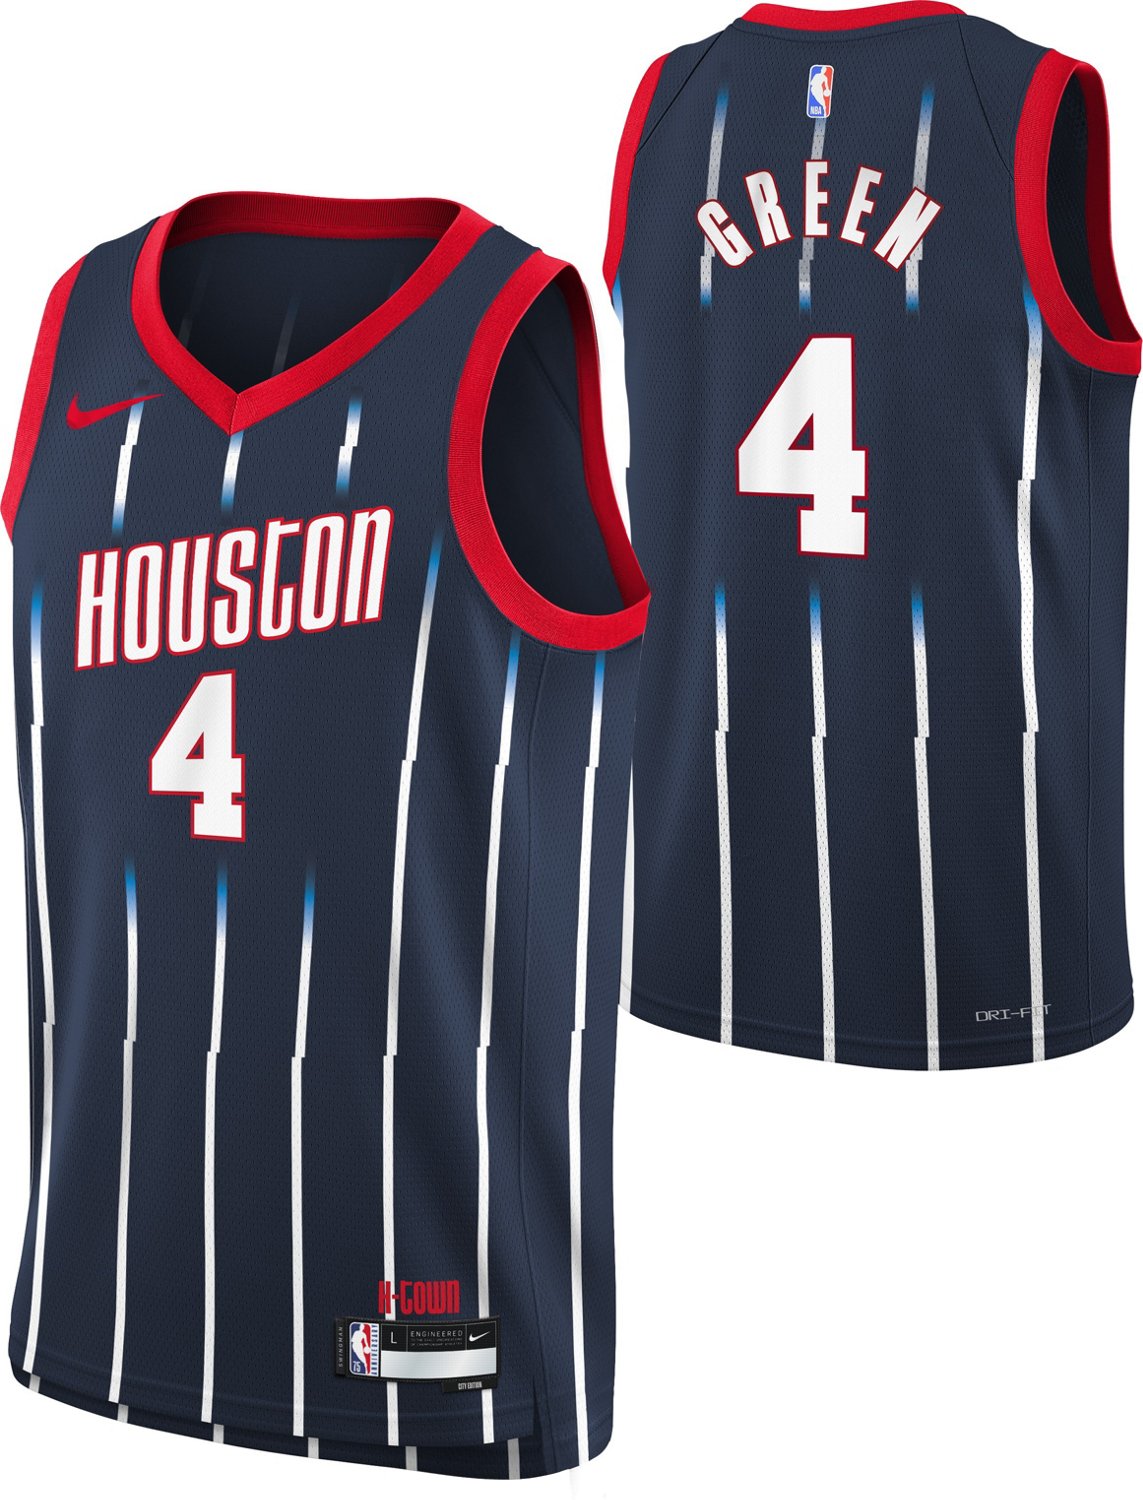 Men's Nike Jalen Green White Houston Rockets Swingman Jersey - Classic Edition Size: Small